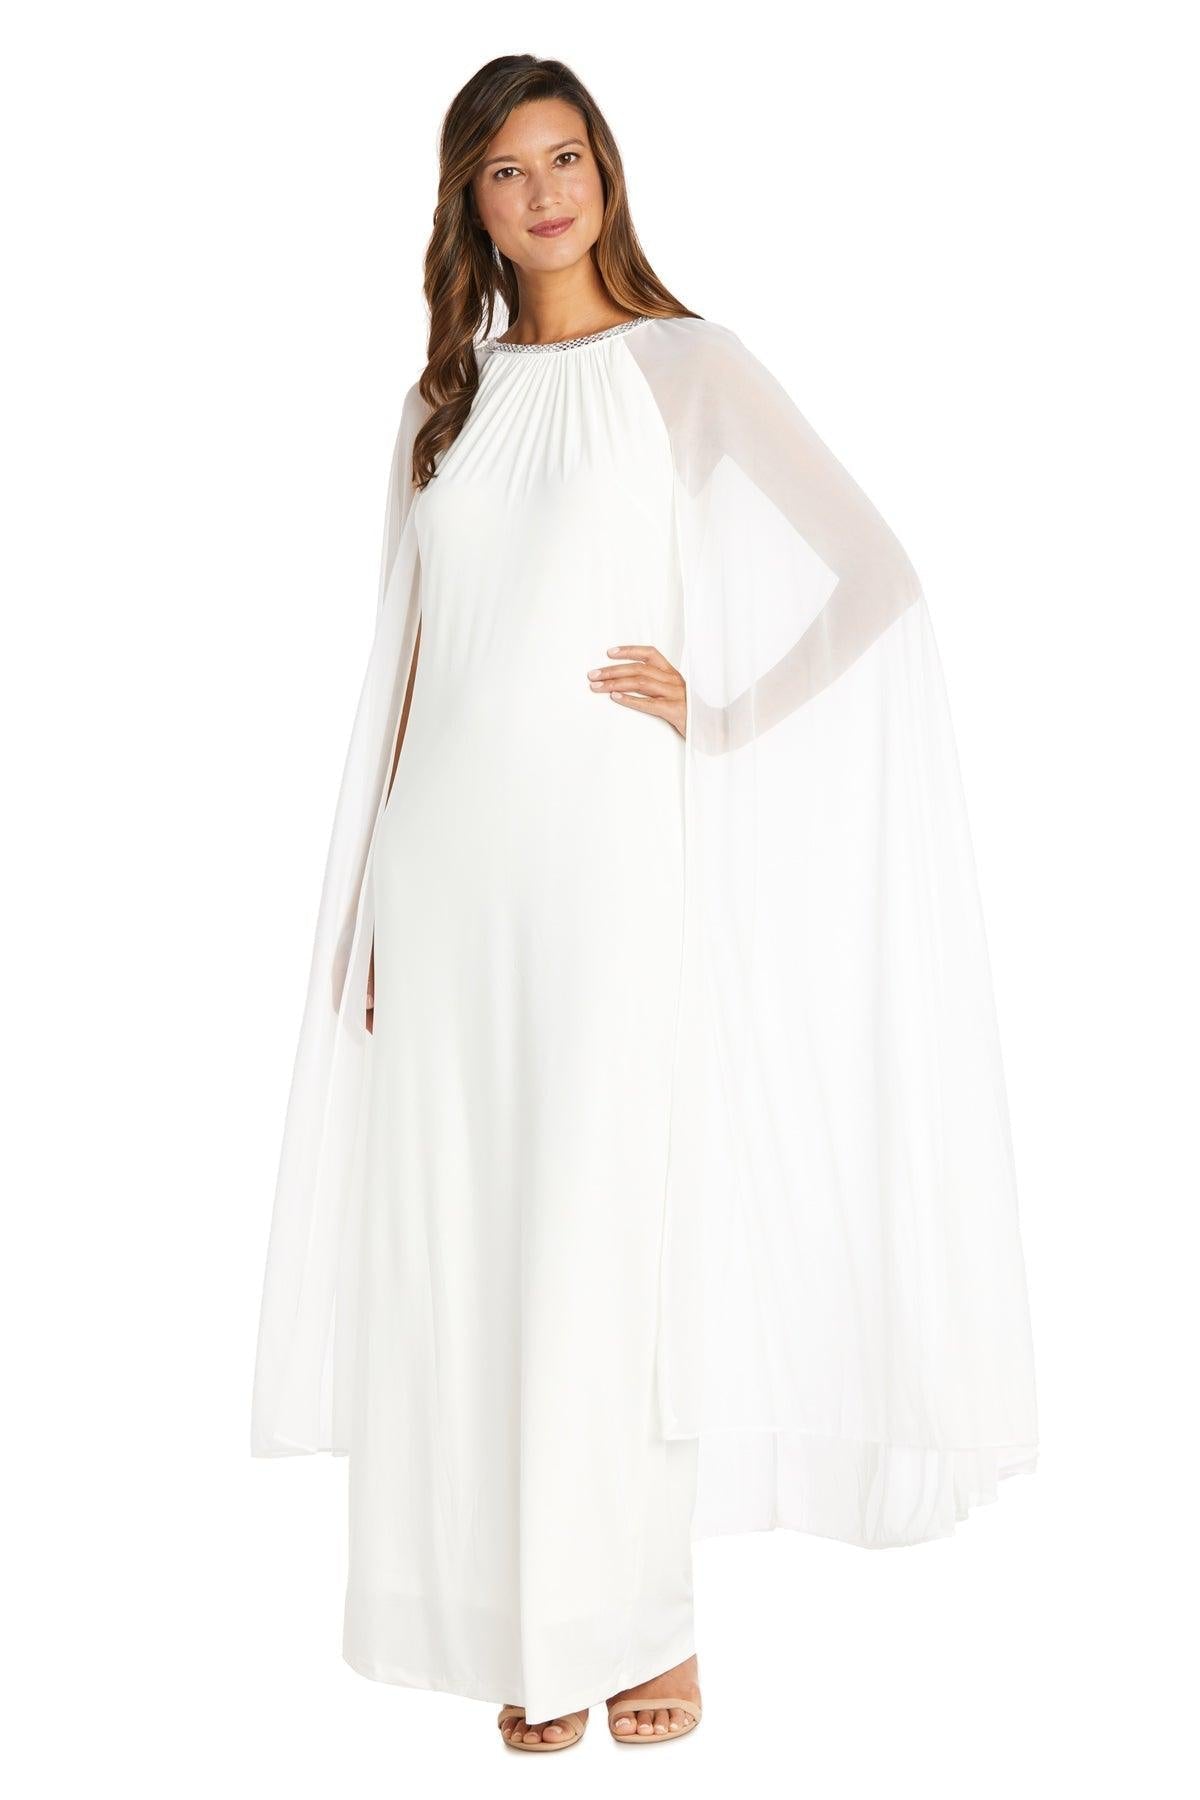 R&M Richards Plus Size Long Formal Cape Gown 2487W | The Dress Outlet ...